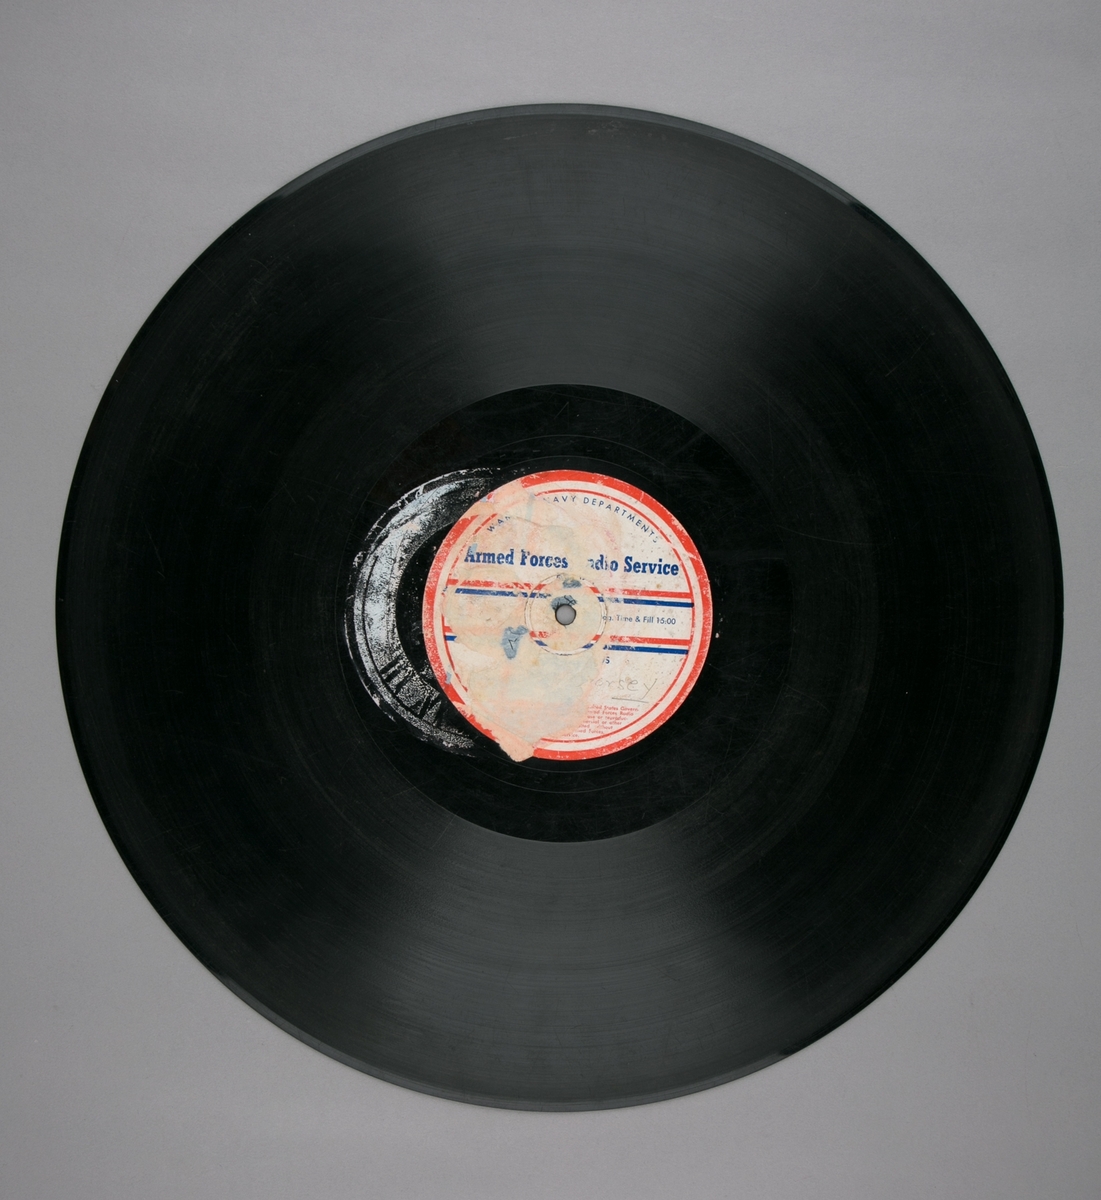 Grammofonplatesamling. LP-plate med tittel "Armed Forces Radio Service" utgitt av War and Navy Departements. Plate i svart vinyl spilles på platespiller med 33 1/3 omdreininger i minuttet (33-plate).